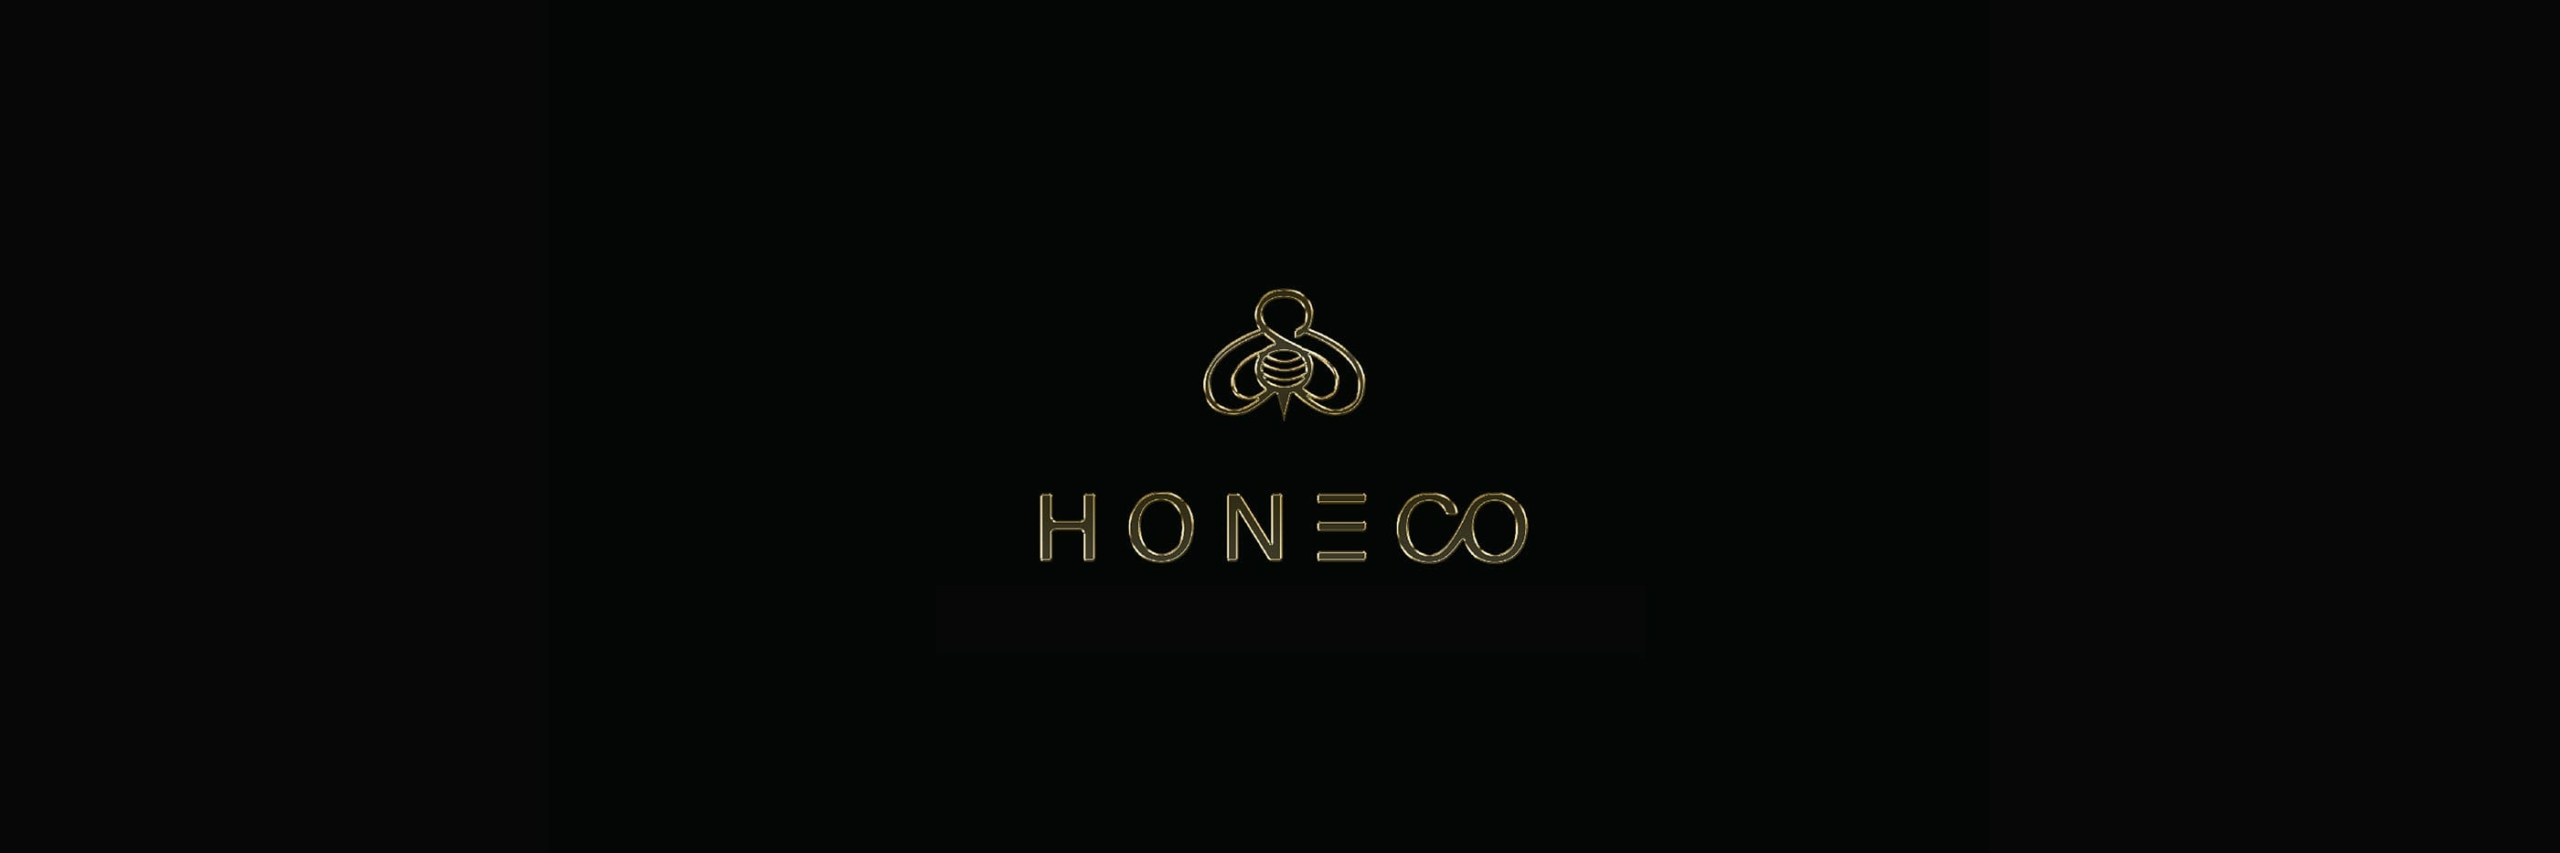 honey logo gold